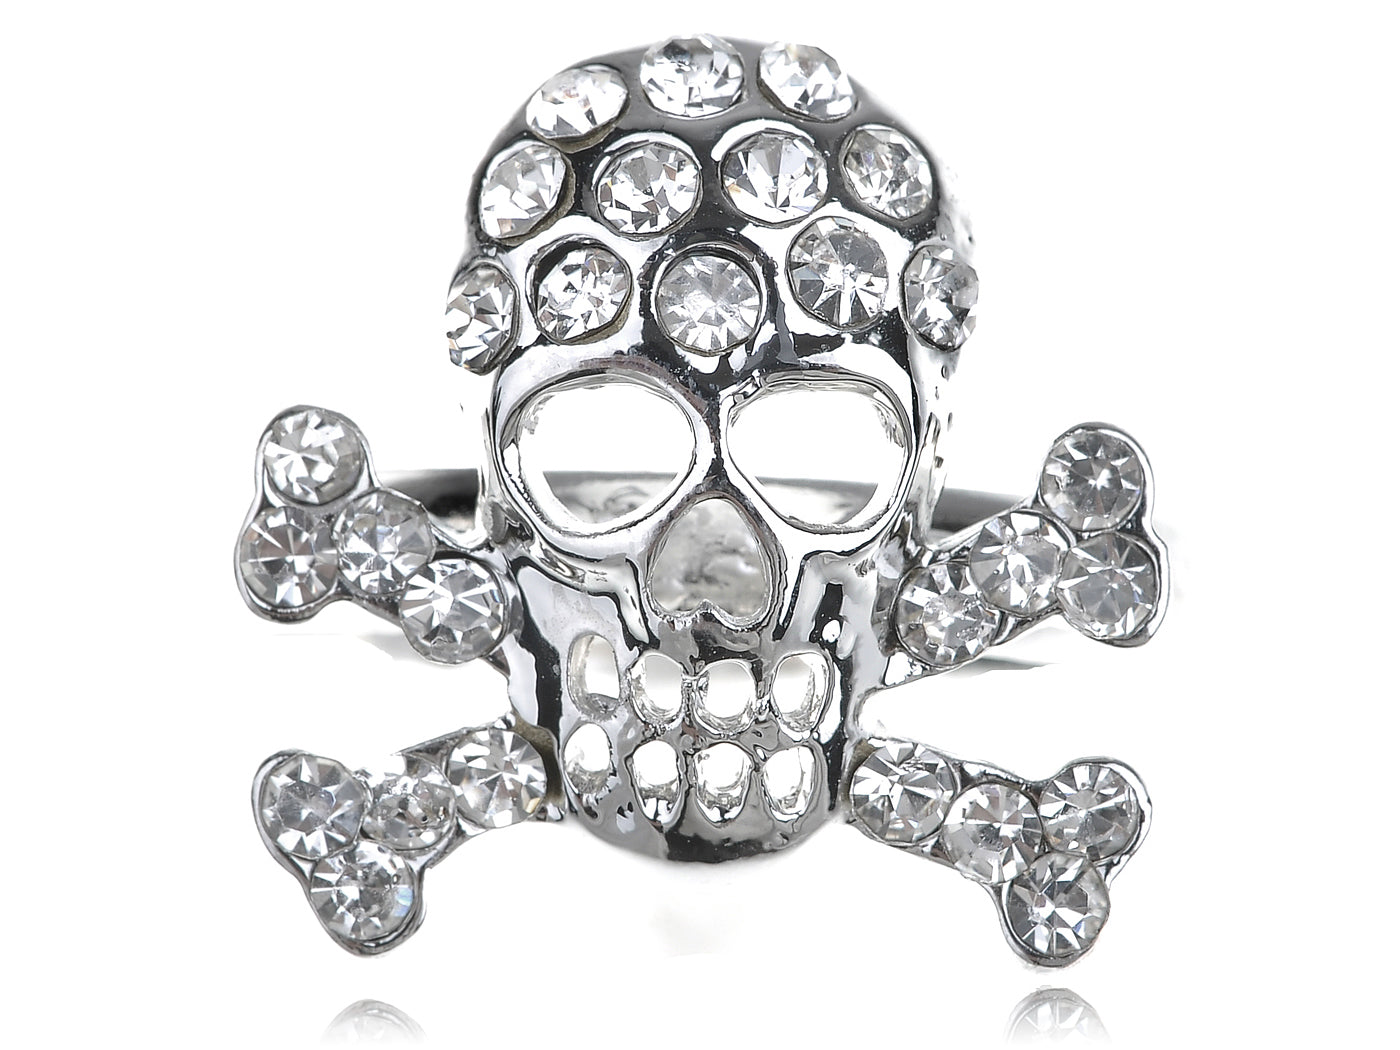 Anarchy Pirate Death Skull Bone Cross Biker Ring